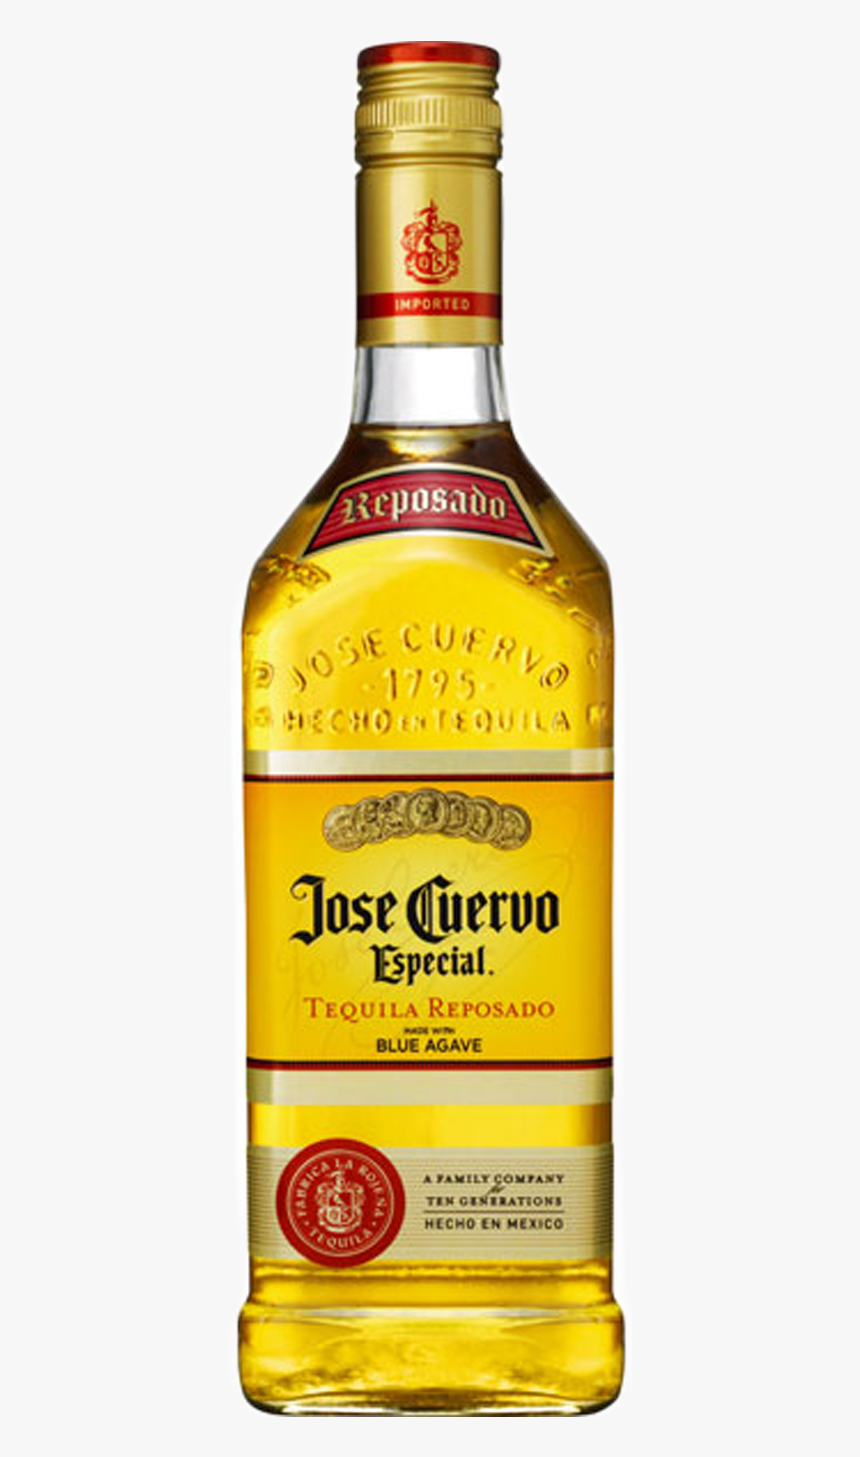 Jose Cuervo Gold 1 Ltr - Jose Cuervo Tequila Reposado, HD Png Download, Free Download